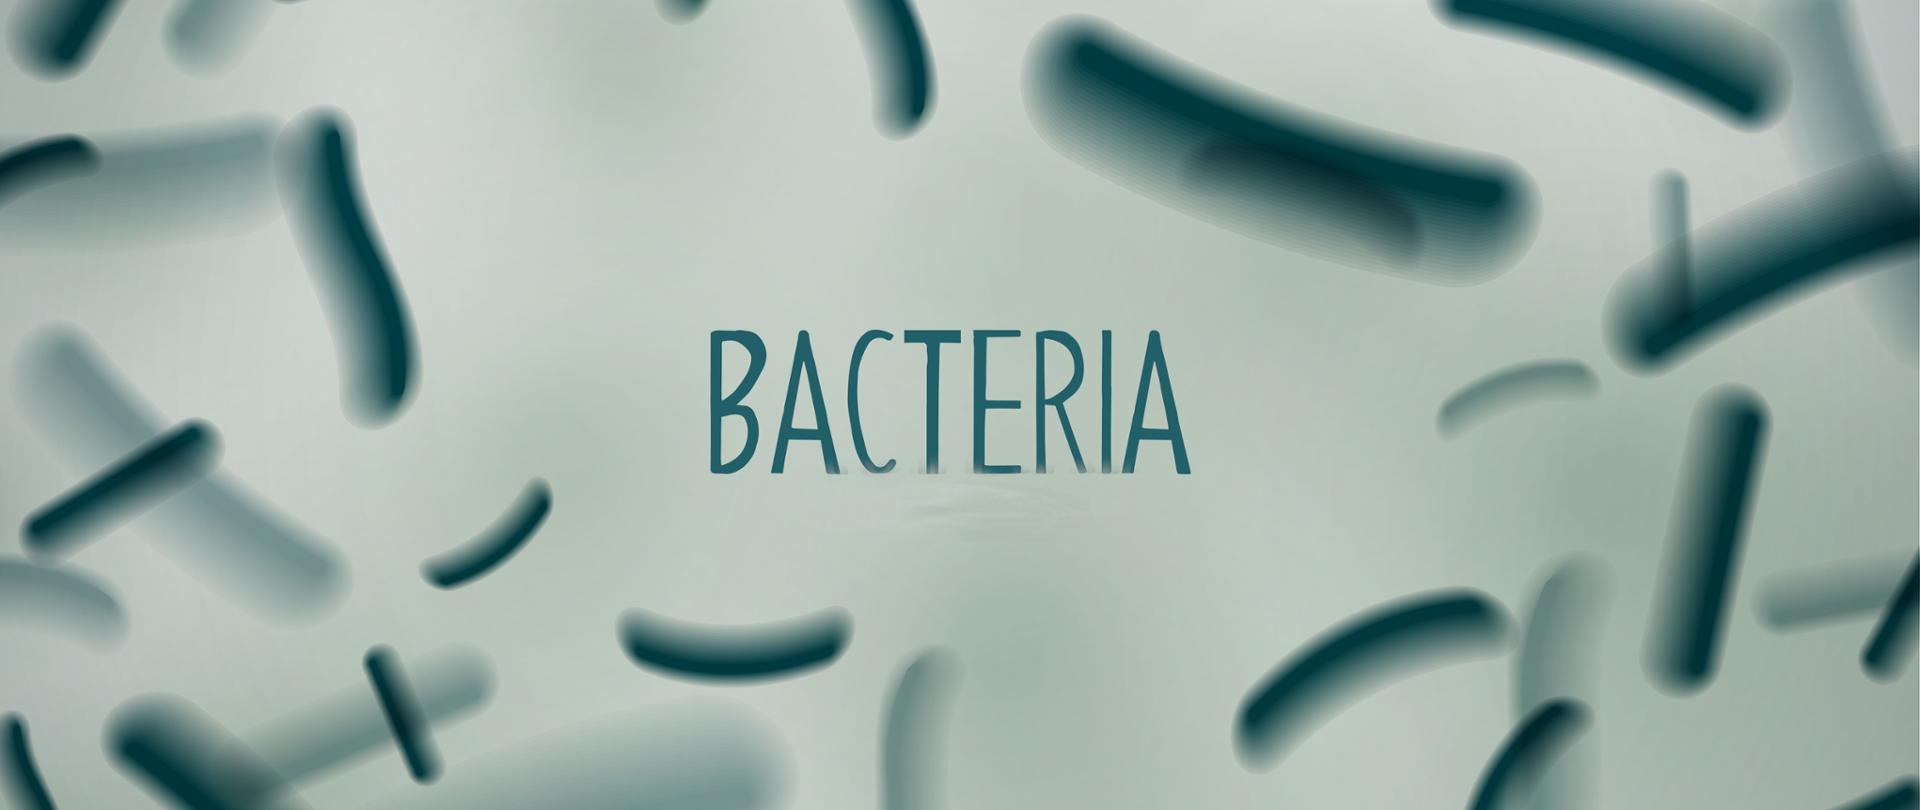 floating virus or bacteria infection background design